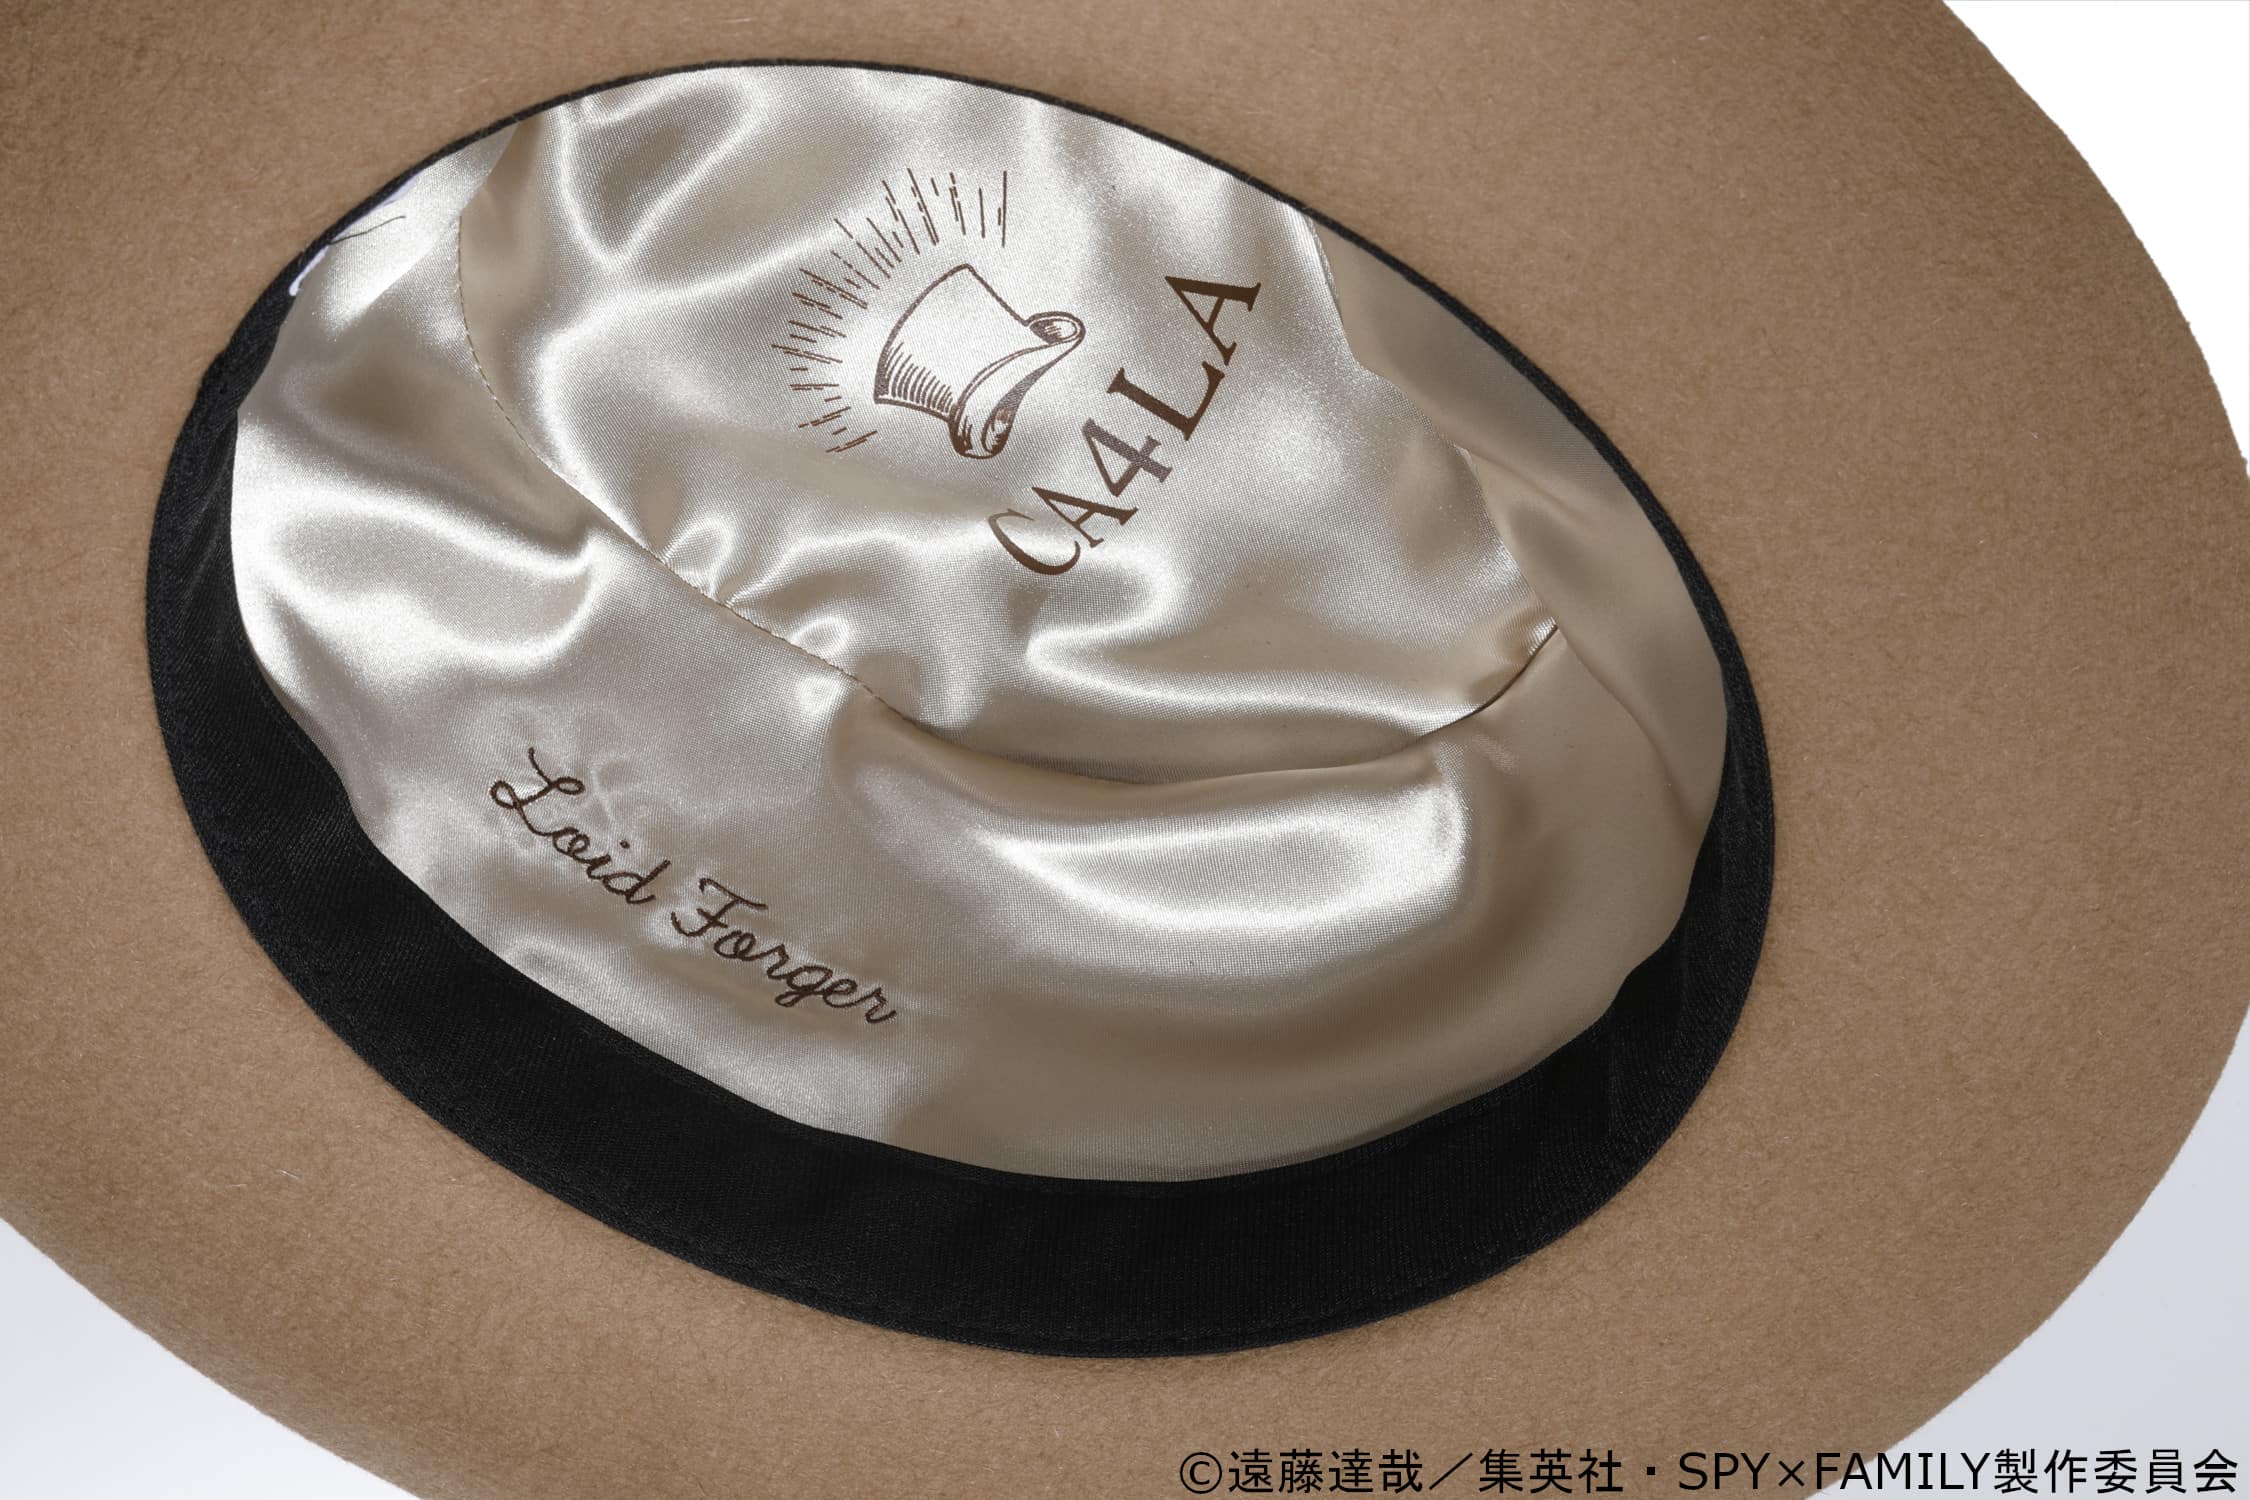 Ryokotomo - df7fe11f ca4la releases spy x family hats inspired by loid and